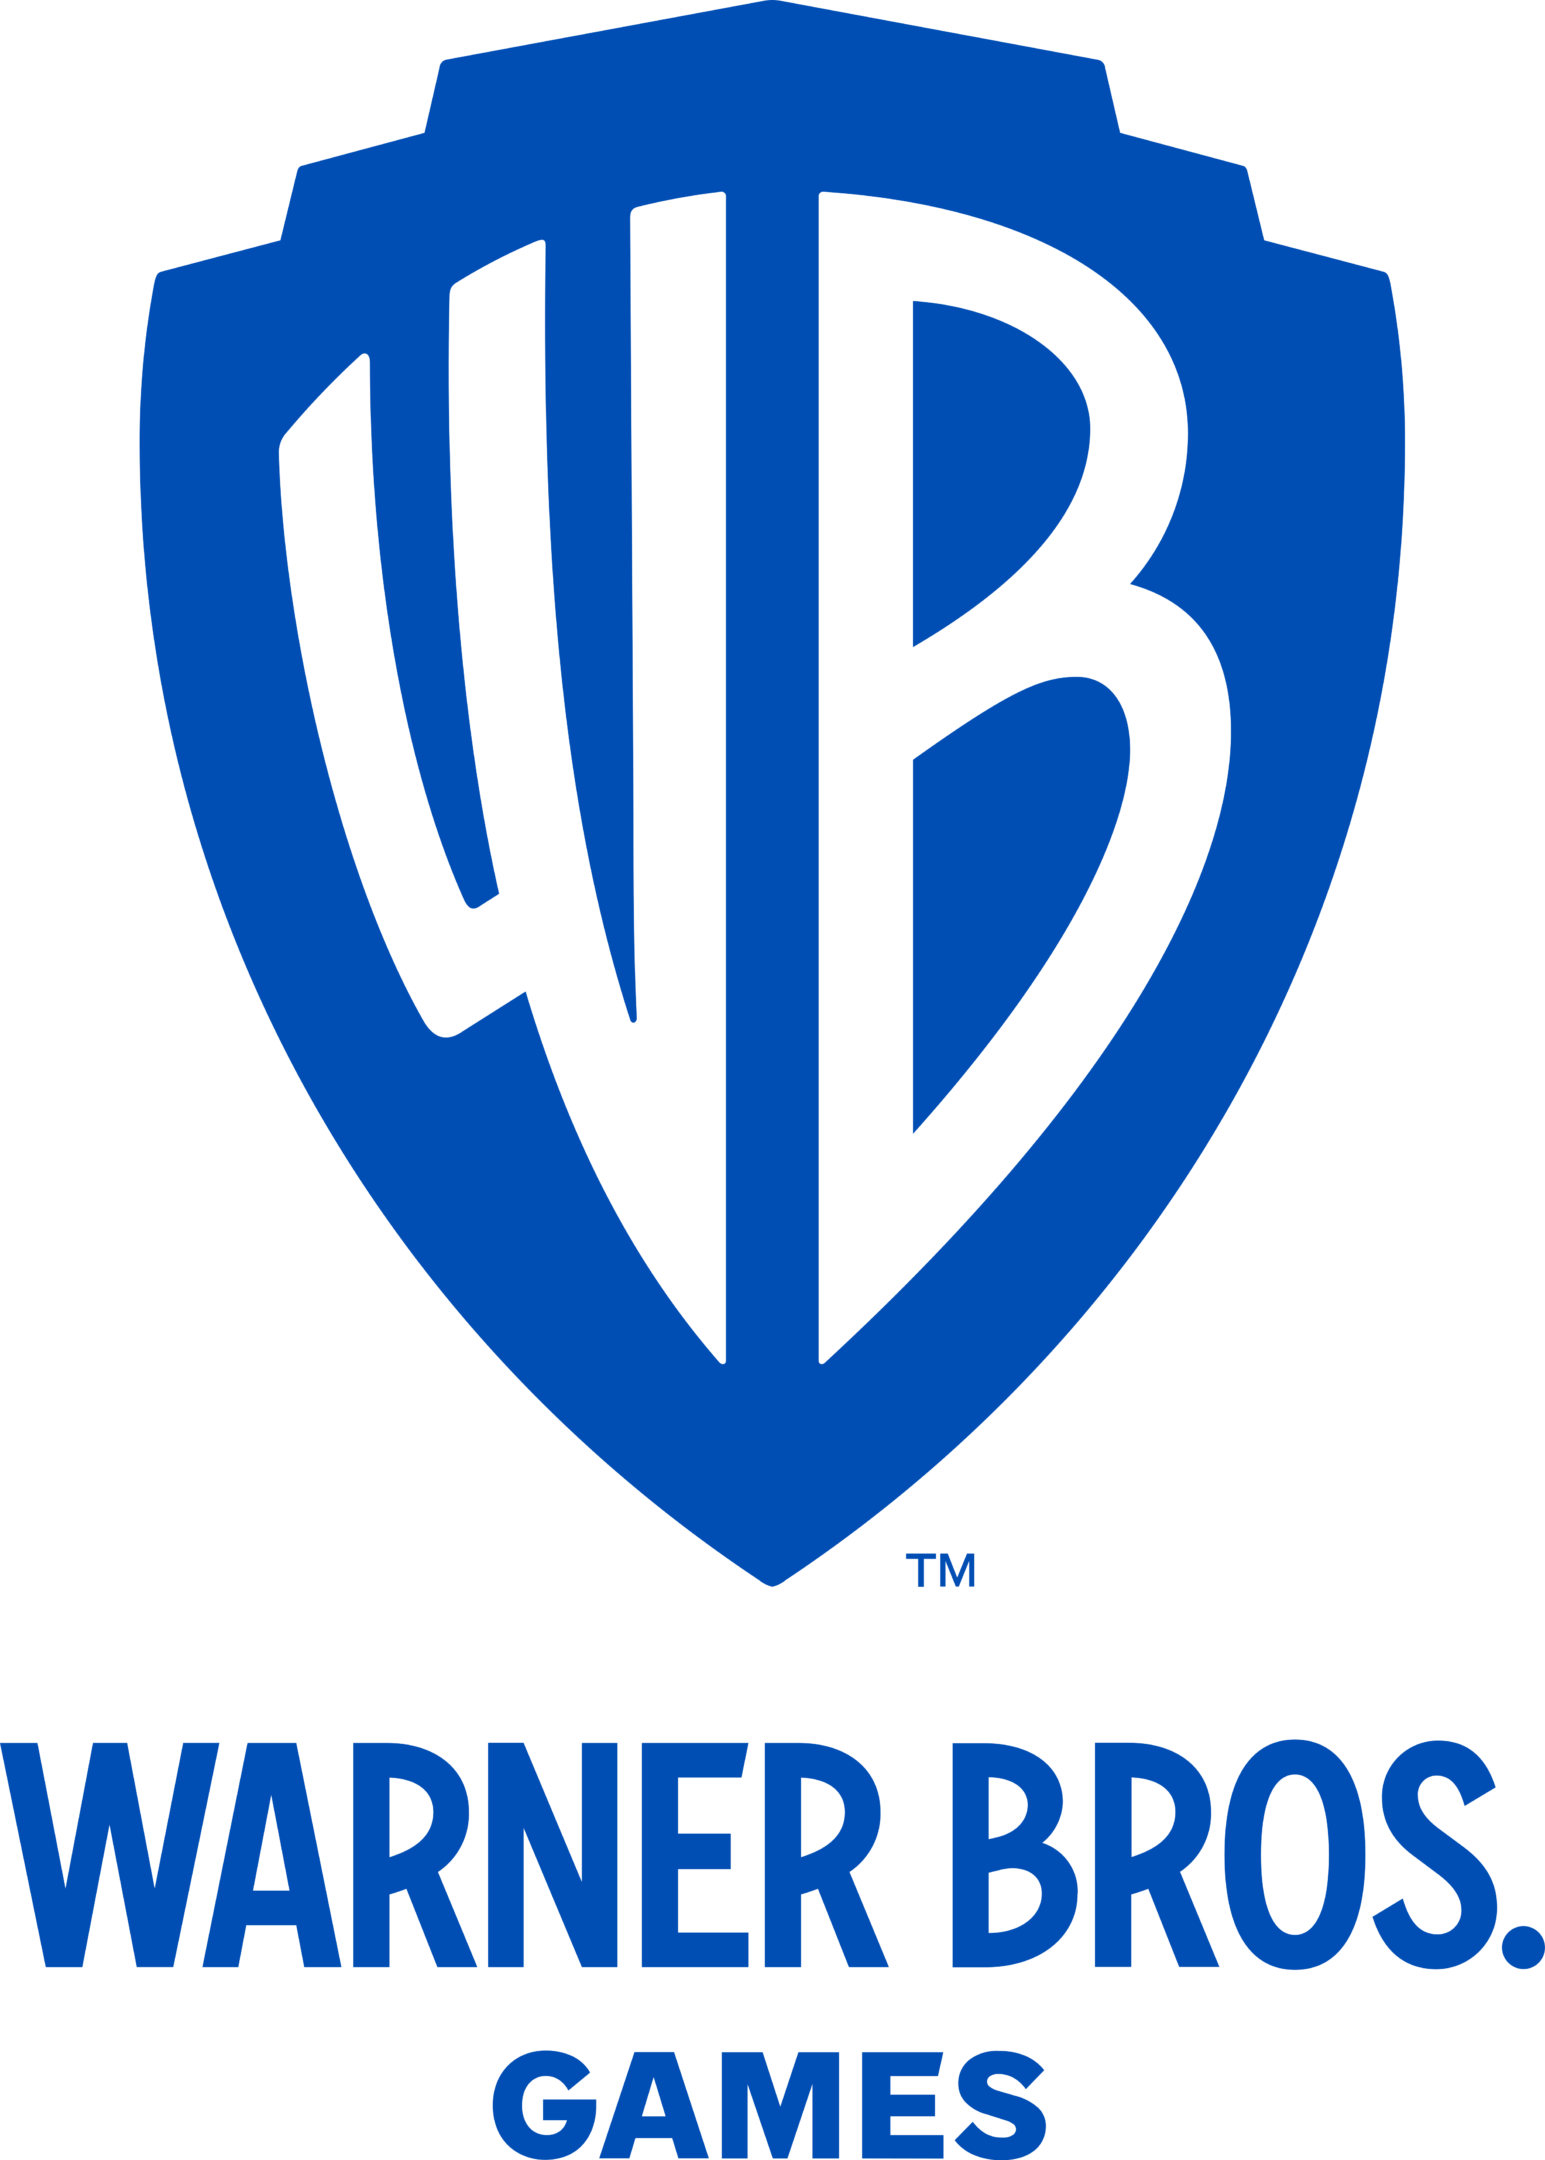 Warner Bros. Games Montreal